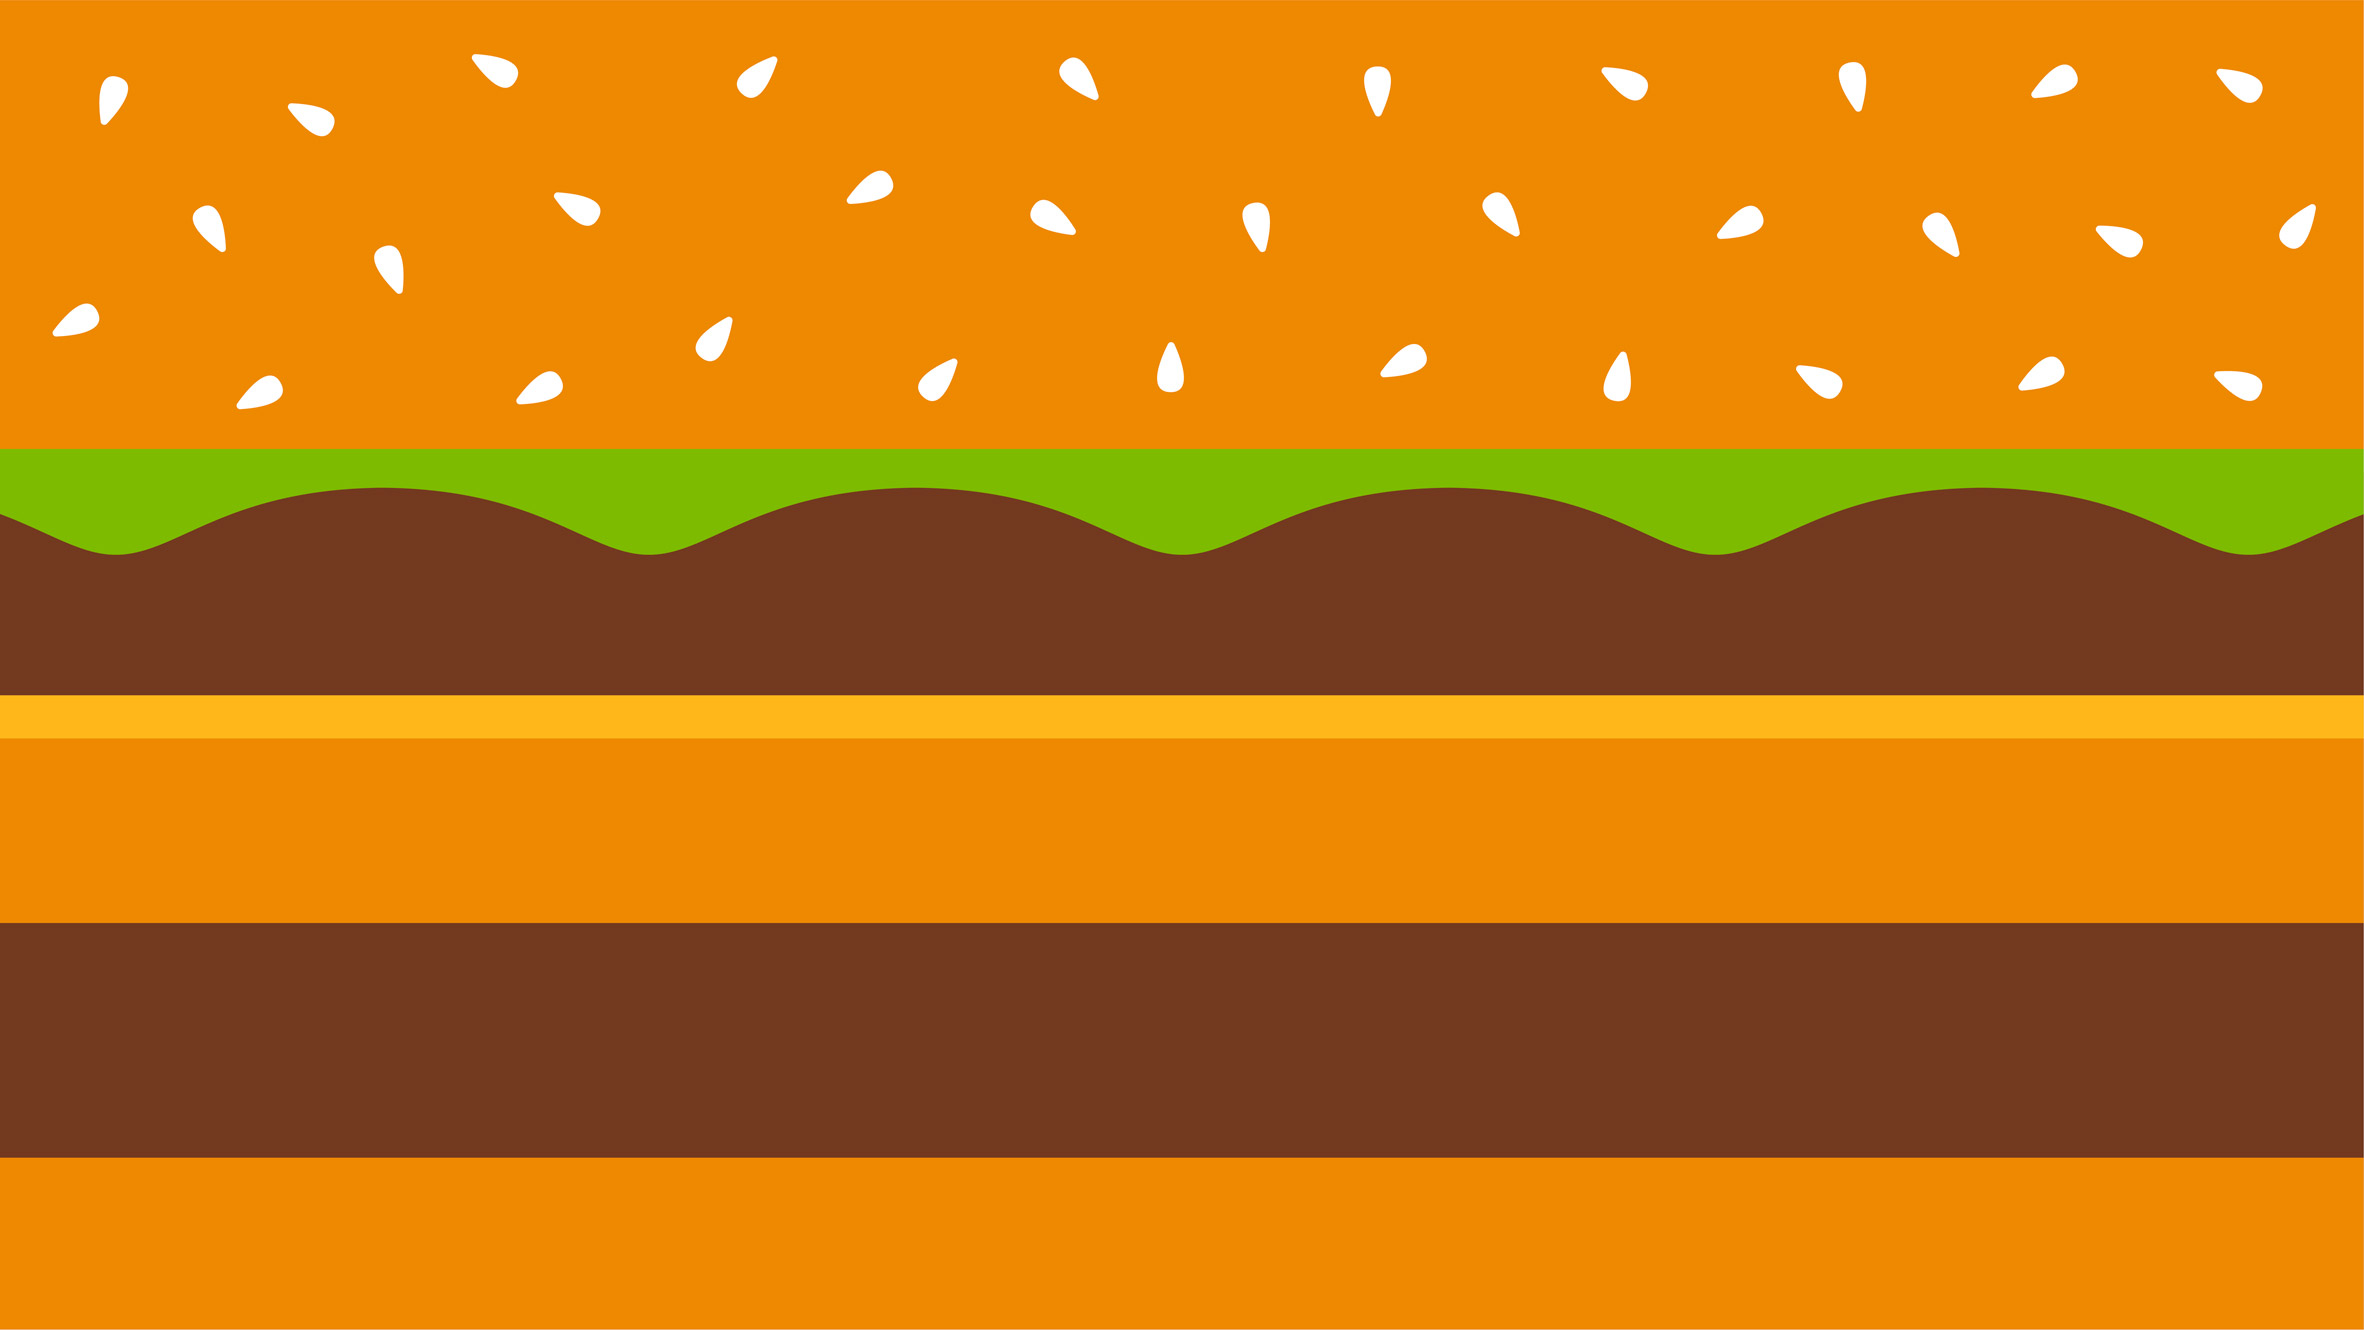 Big Mac illustration